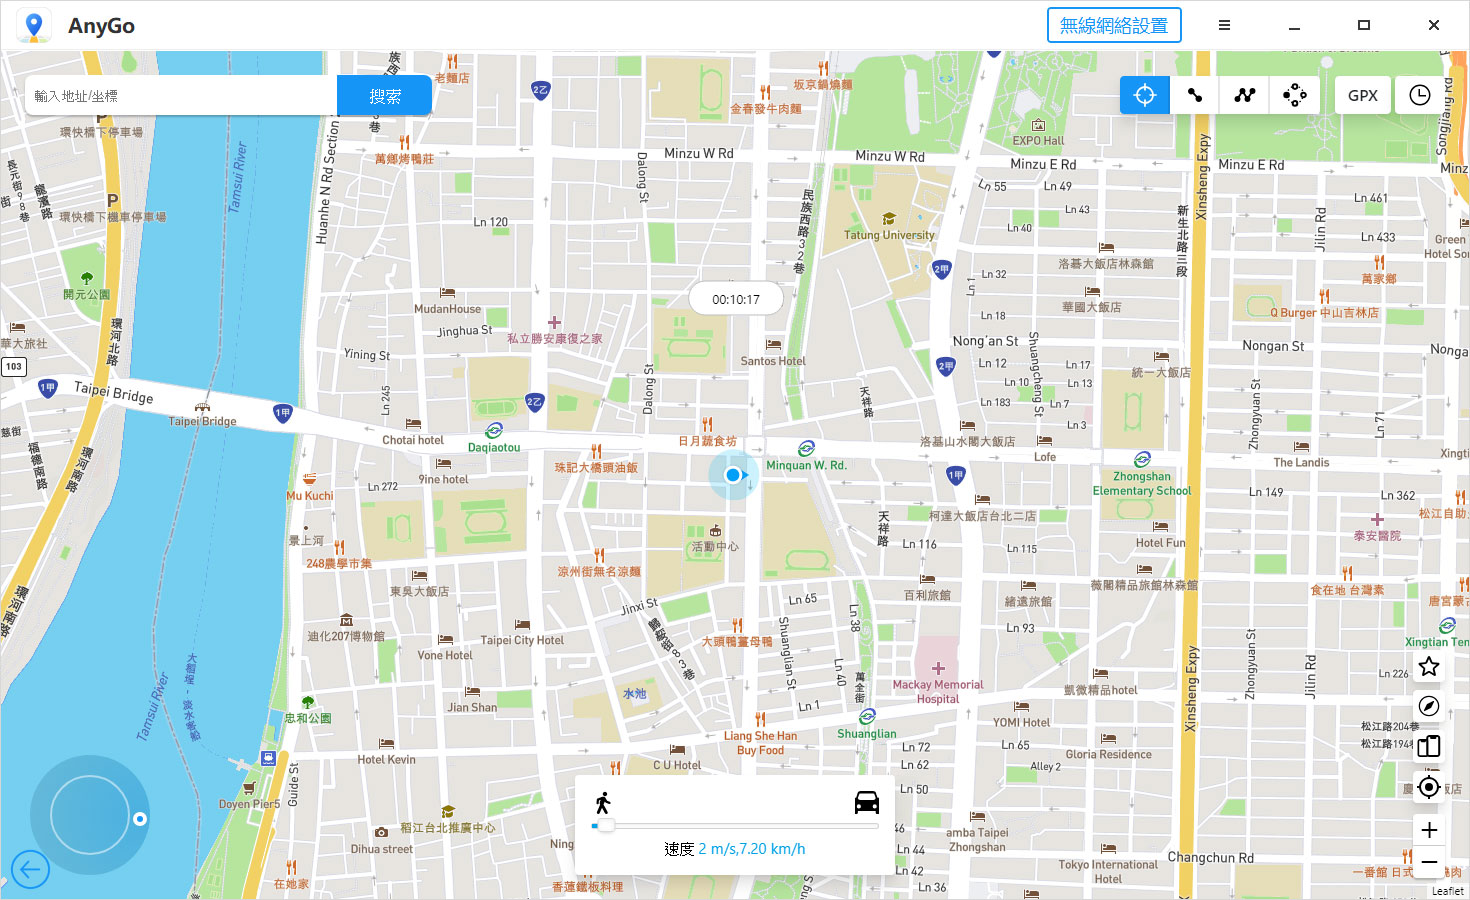 iToolab AnyGo 直接嵌入了 Google 地圖介面，我們可以很直觀地看到目前的位置，並利用內建工具來移動我們的定位位置。